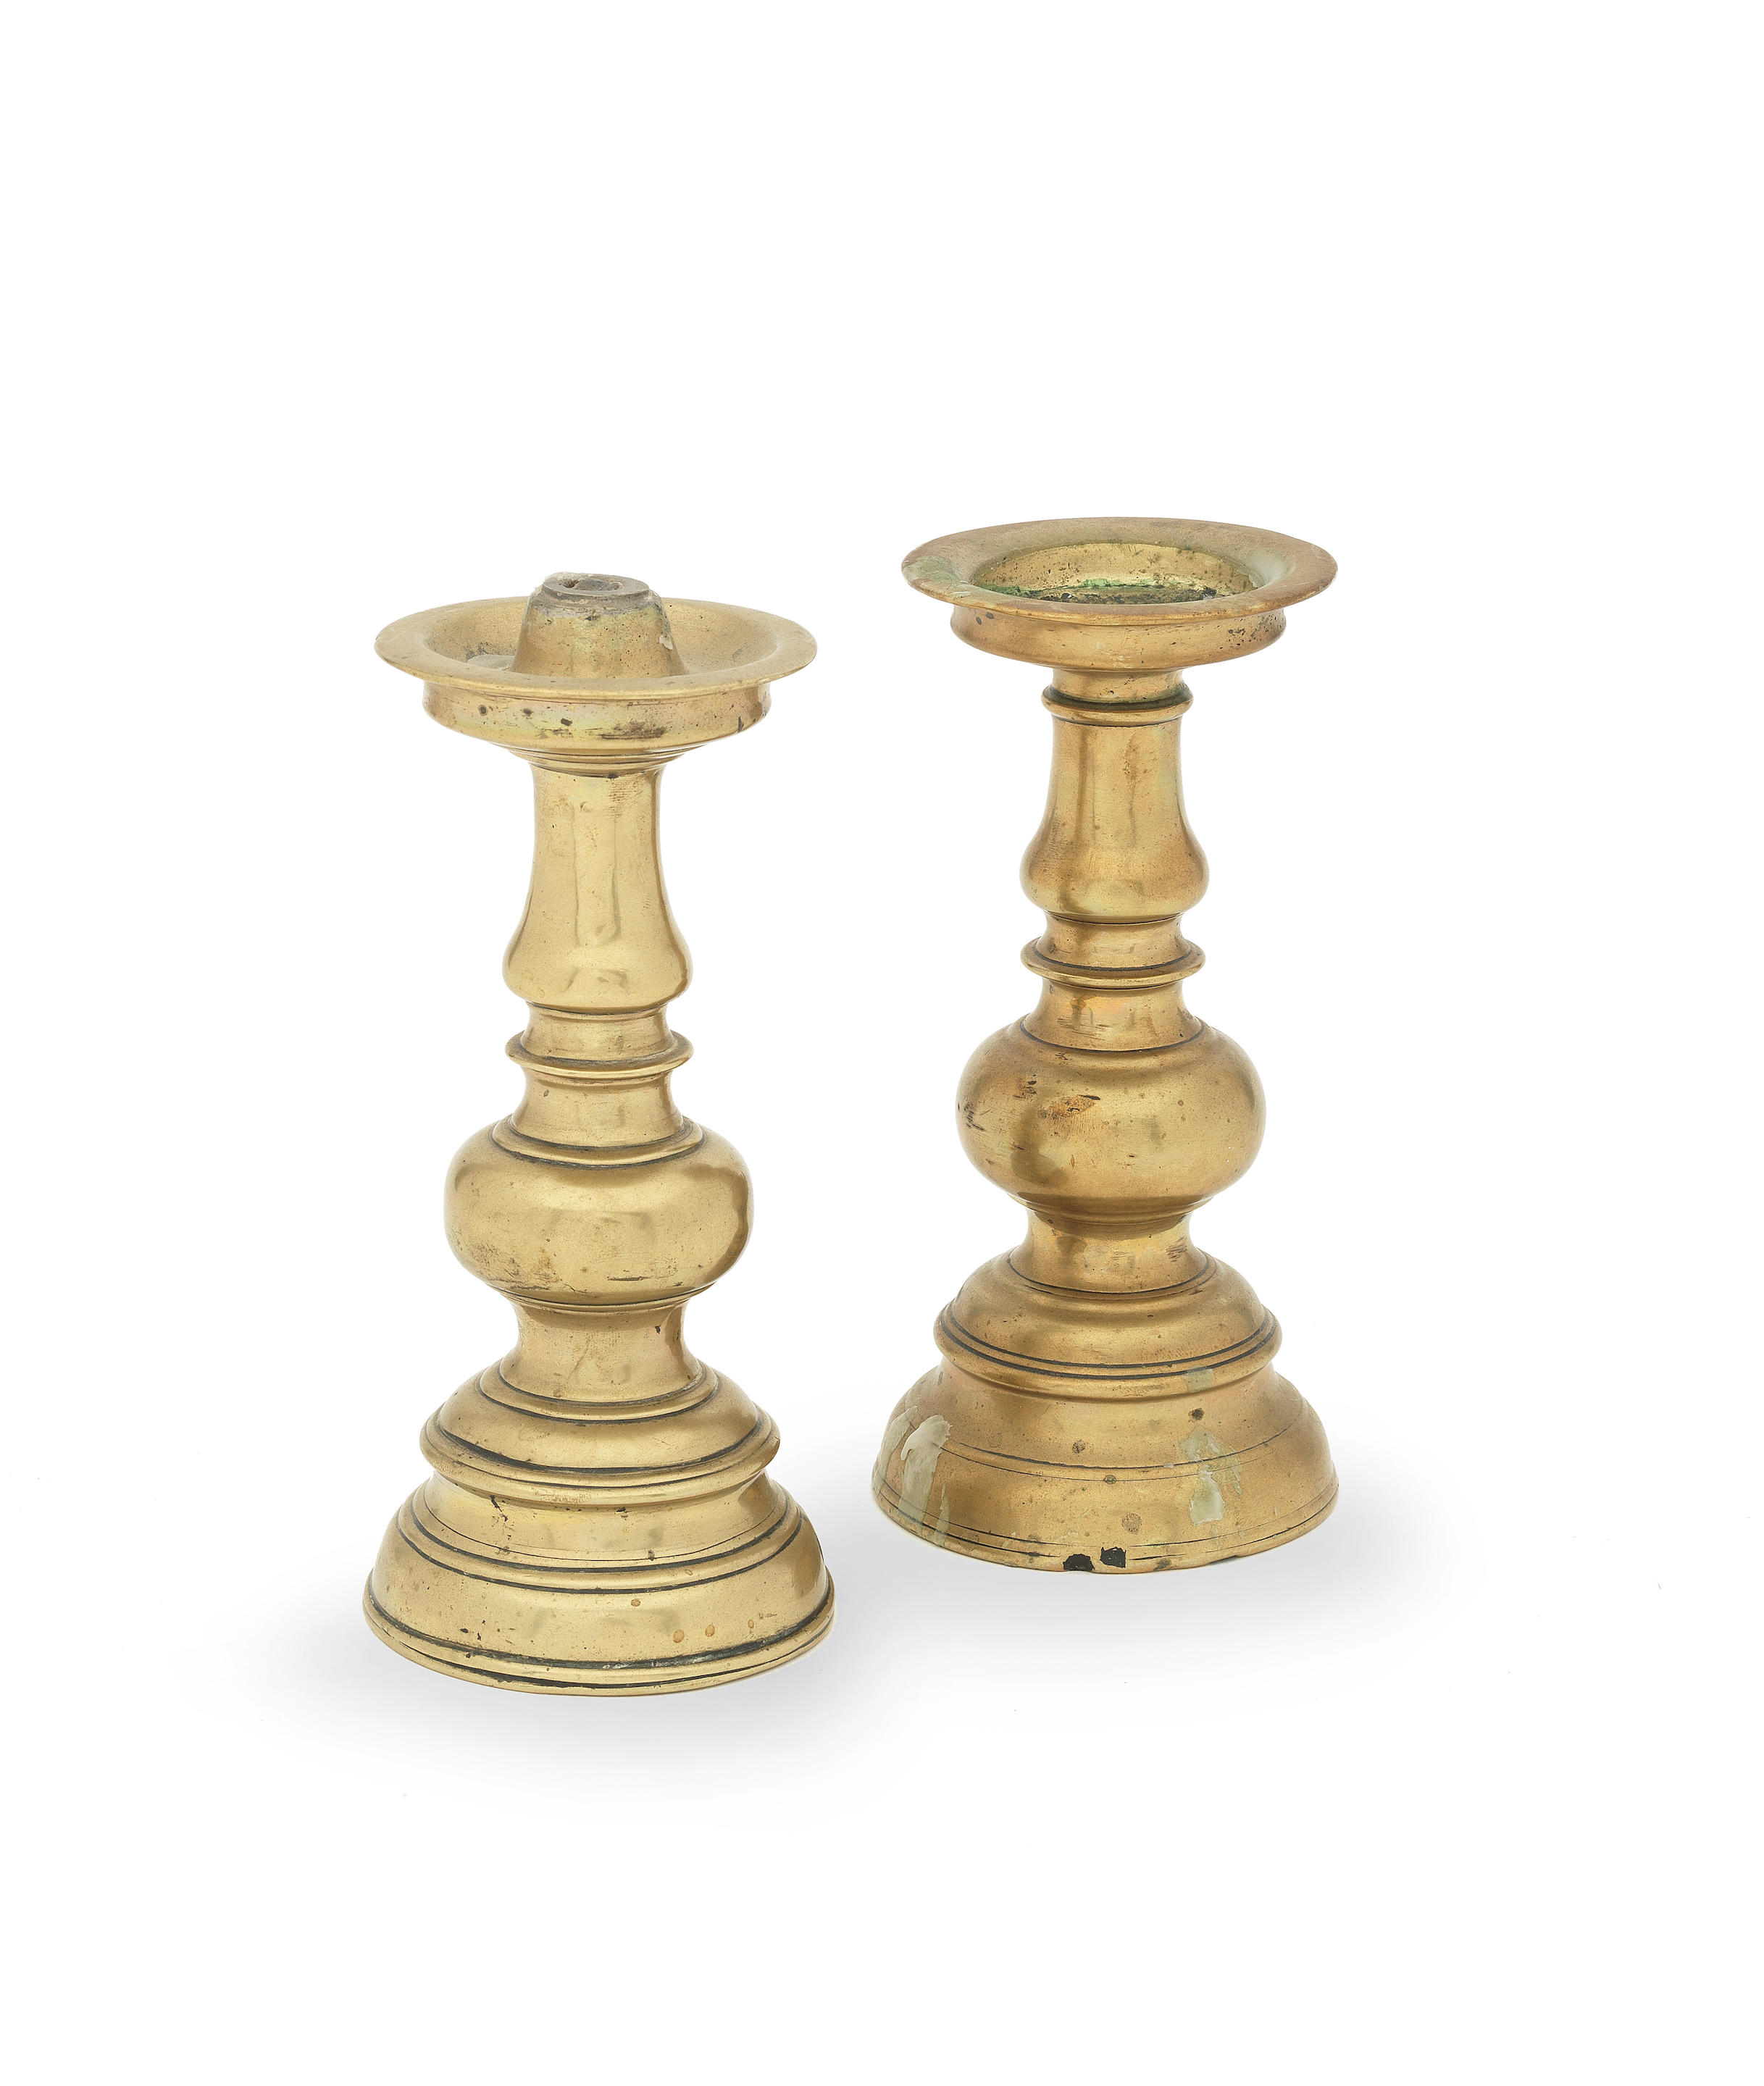 Two similar brass alloy pricket candlesticks, Flemish or German